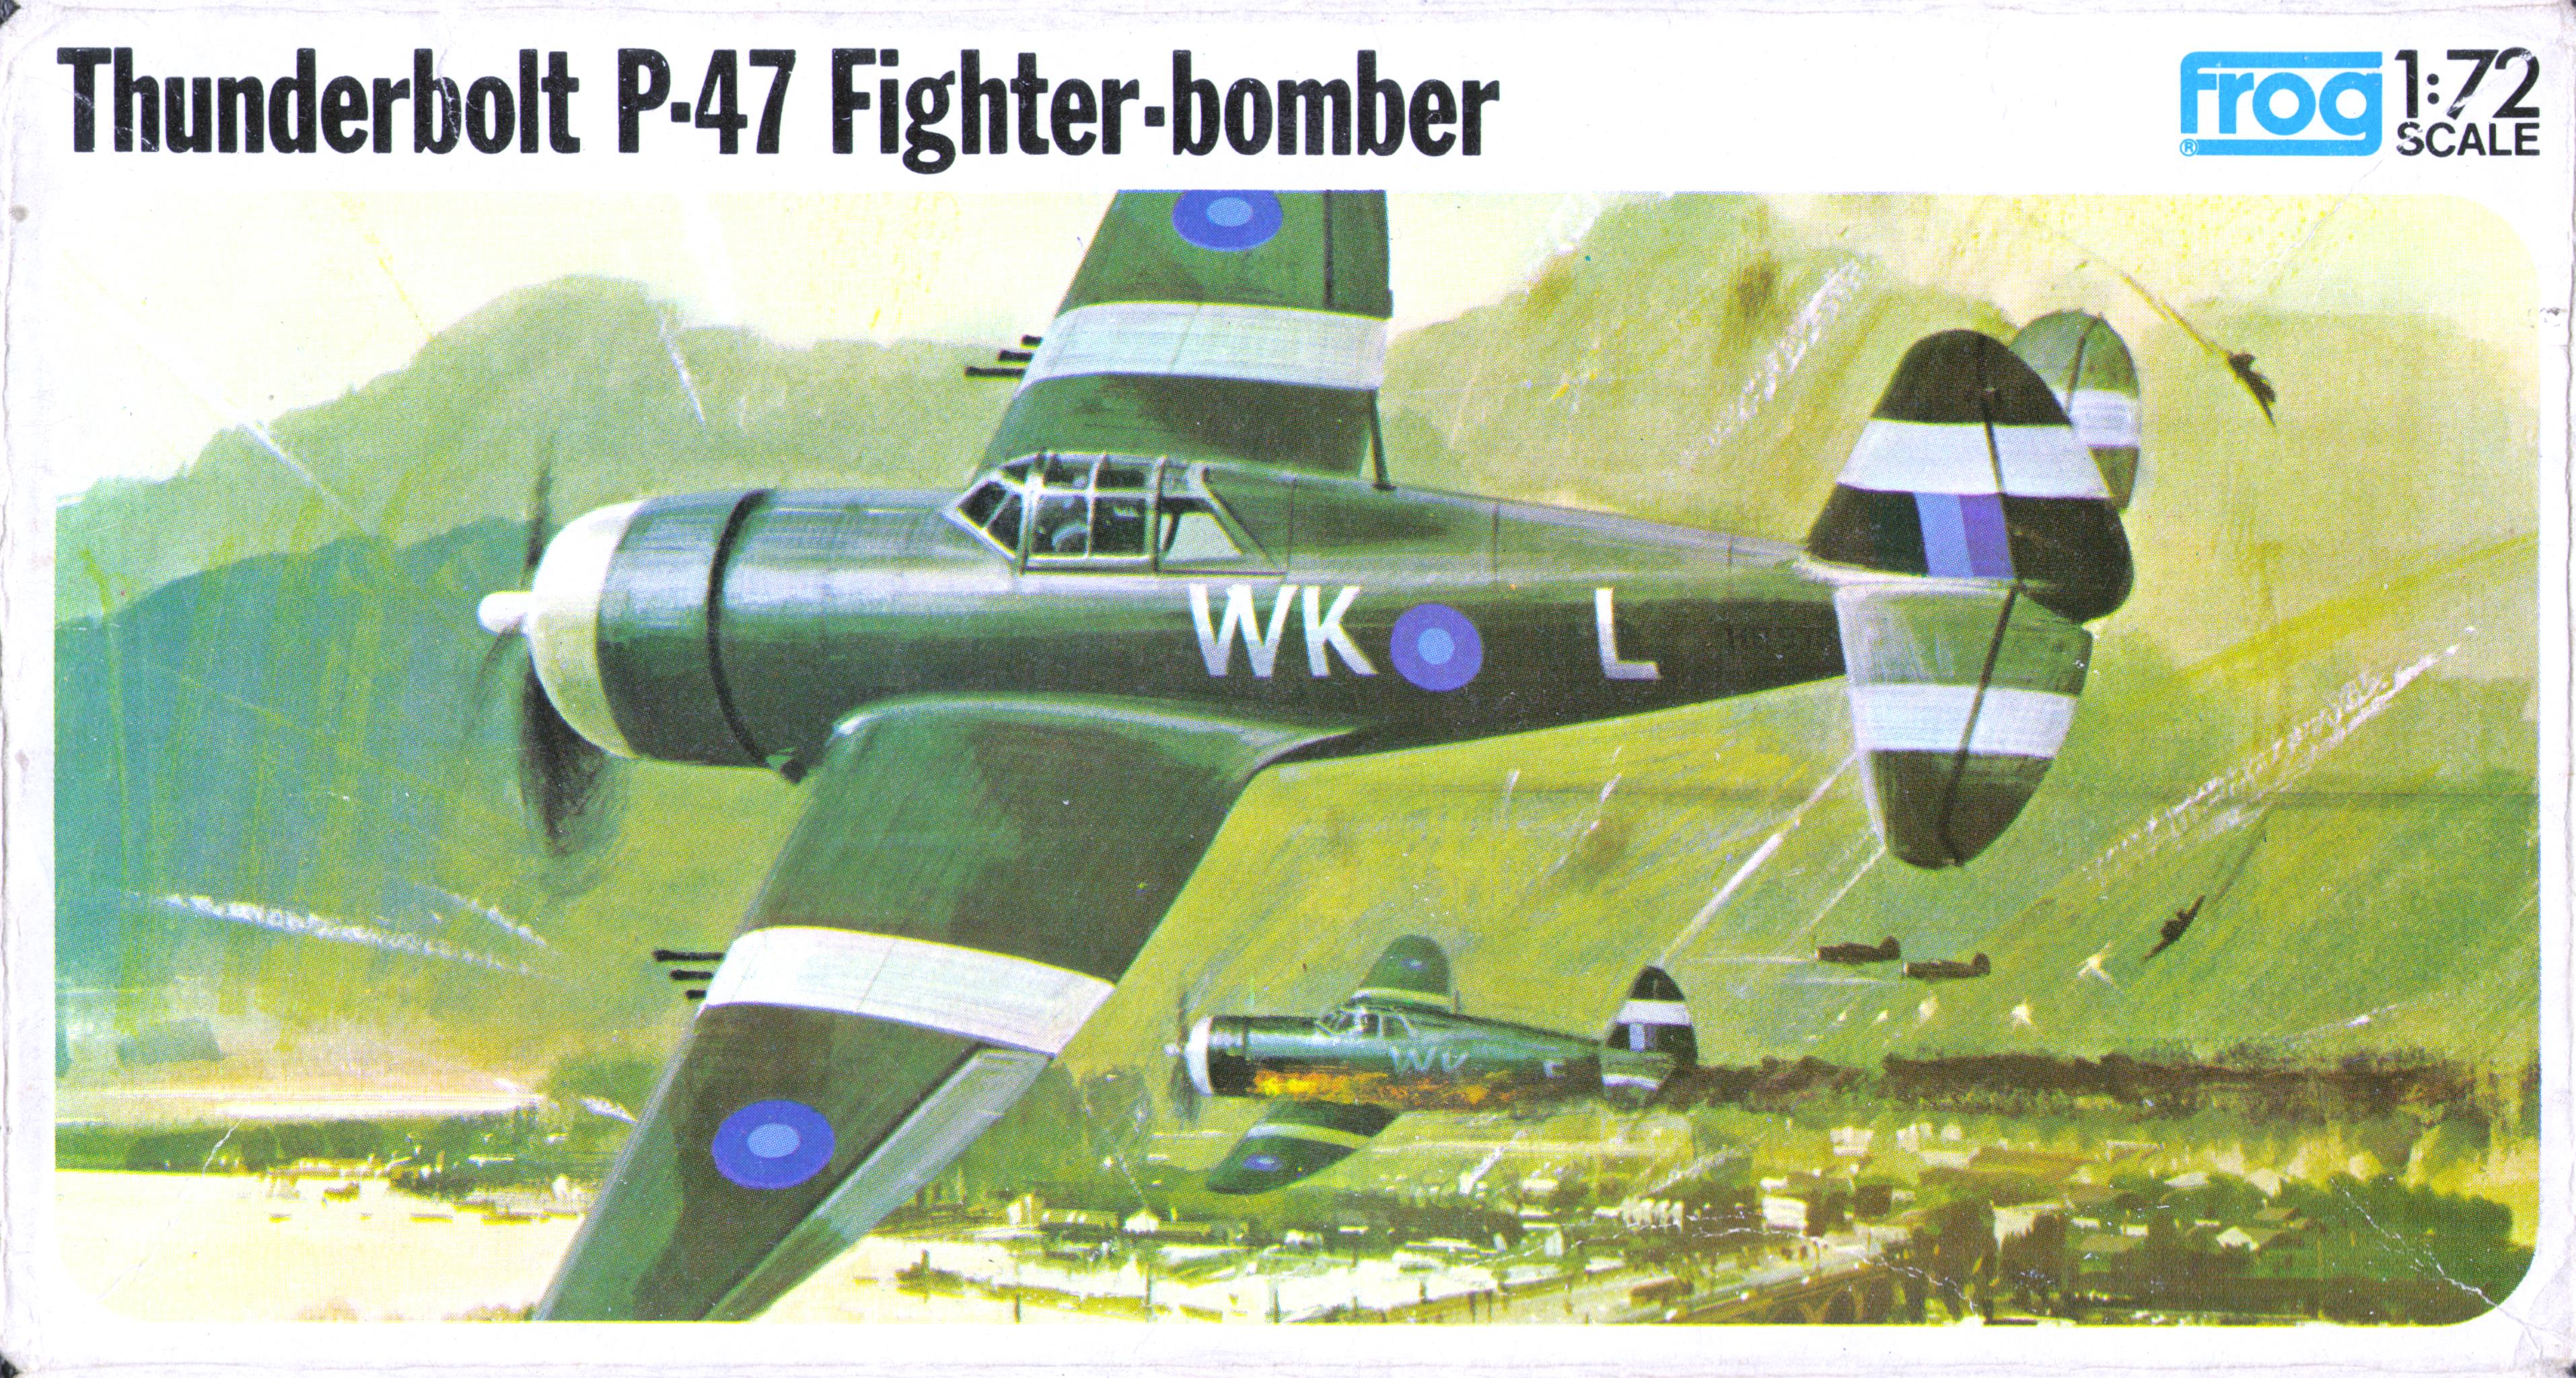 Верх коробки FROG F390 Thunderbolt P-47 Fighter bomber, Blue series, 1974